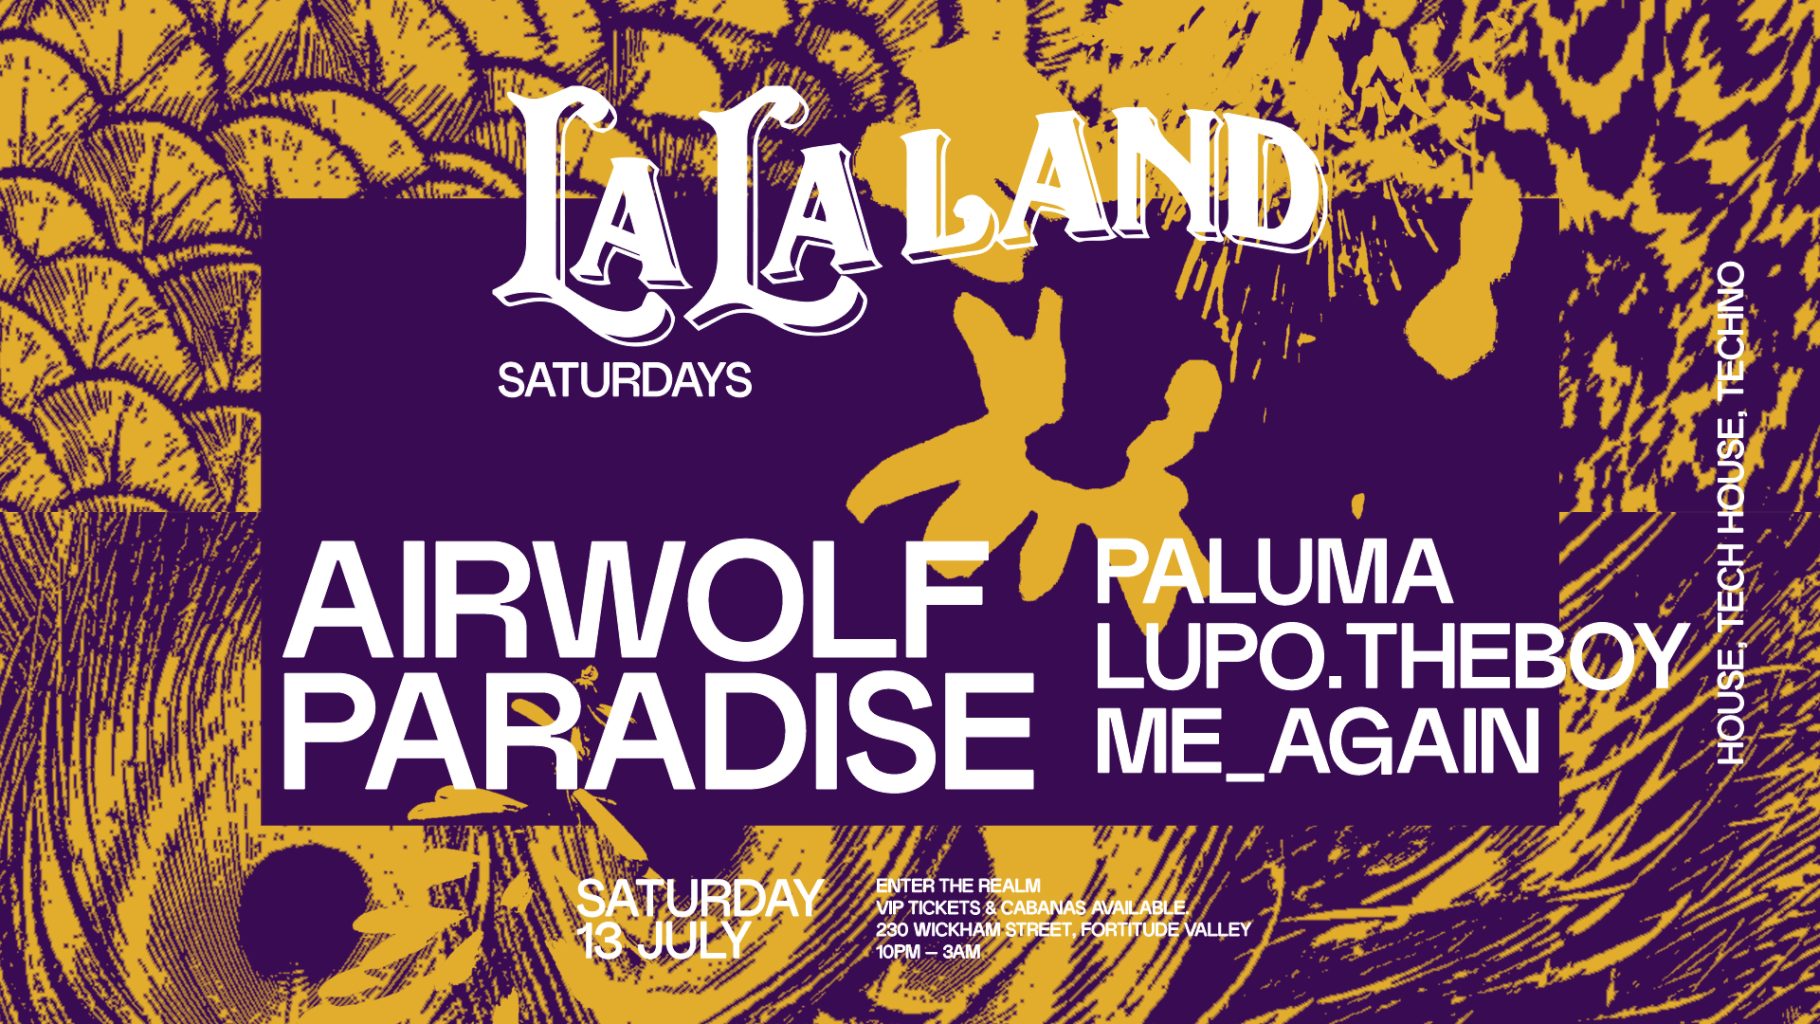 La La Land Saturdays ft. Airwolf Paradise | Events at The Prince Consort